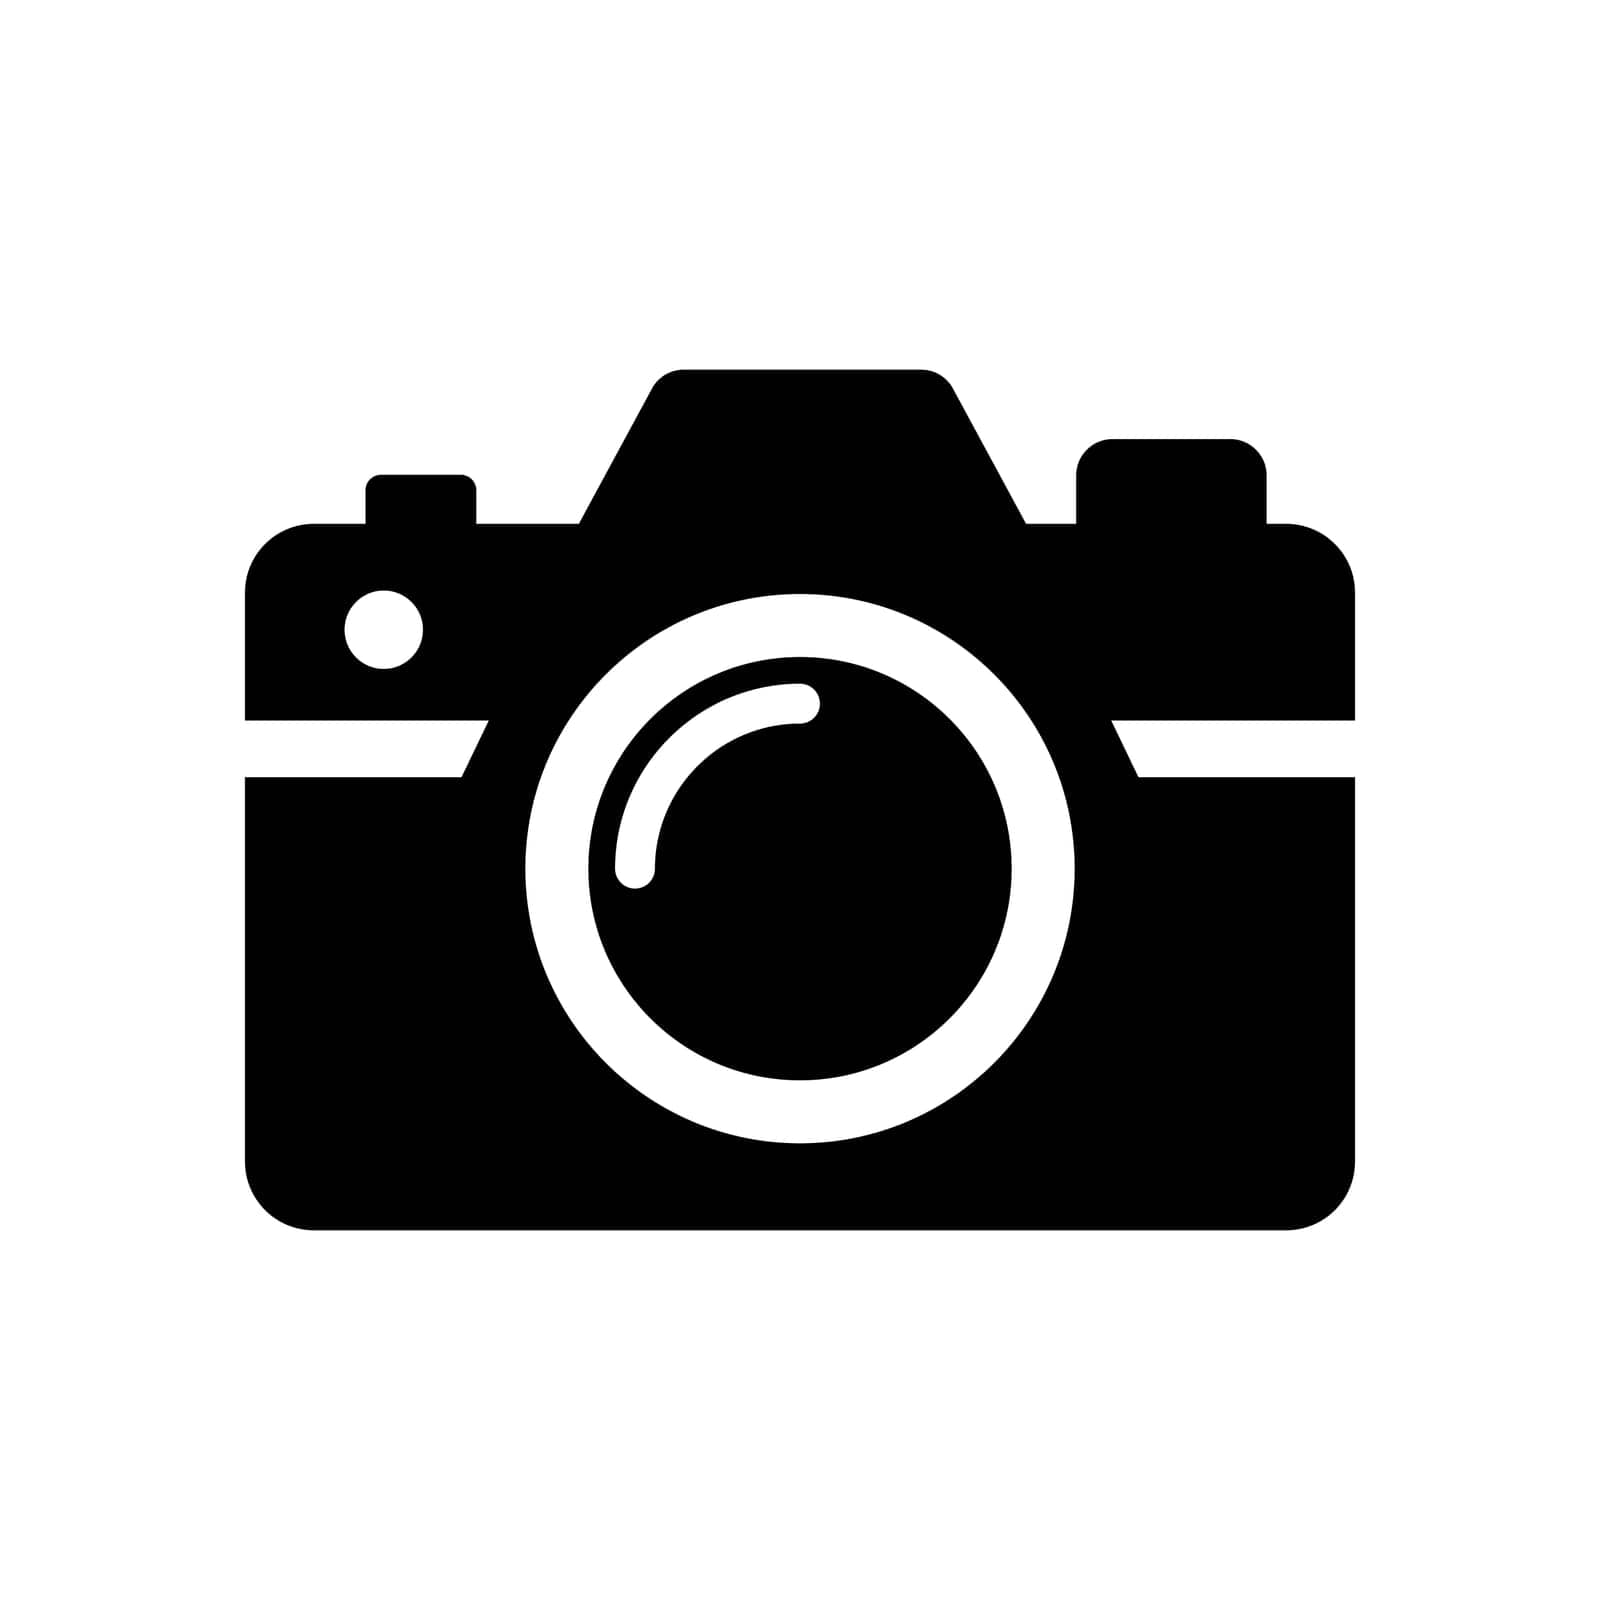 Camera icon. Photo camera symbol. Black icon of camera isolated on white background. Vector illustration.